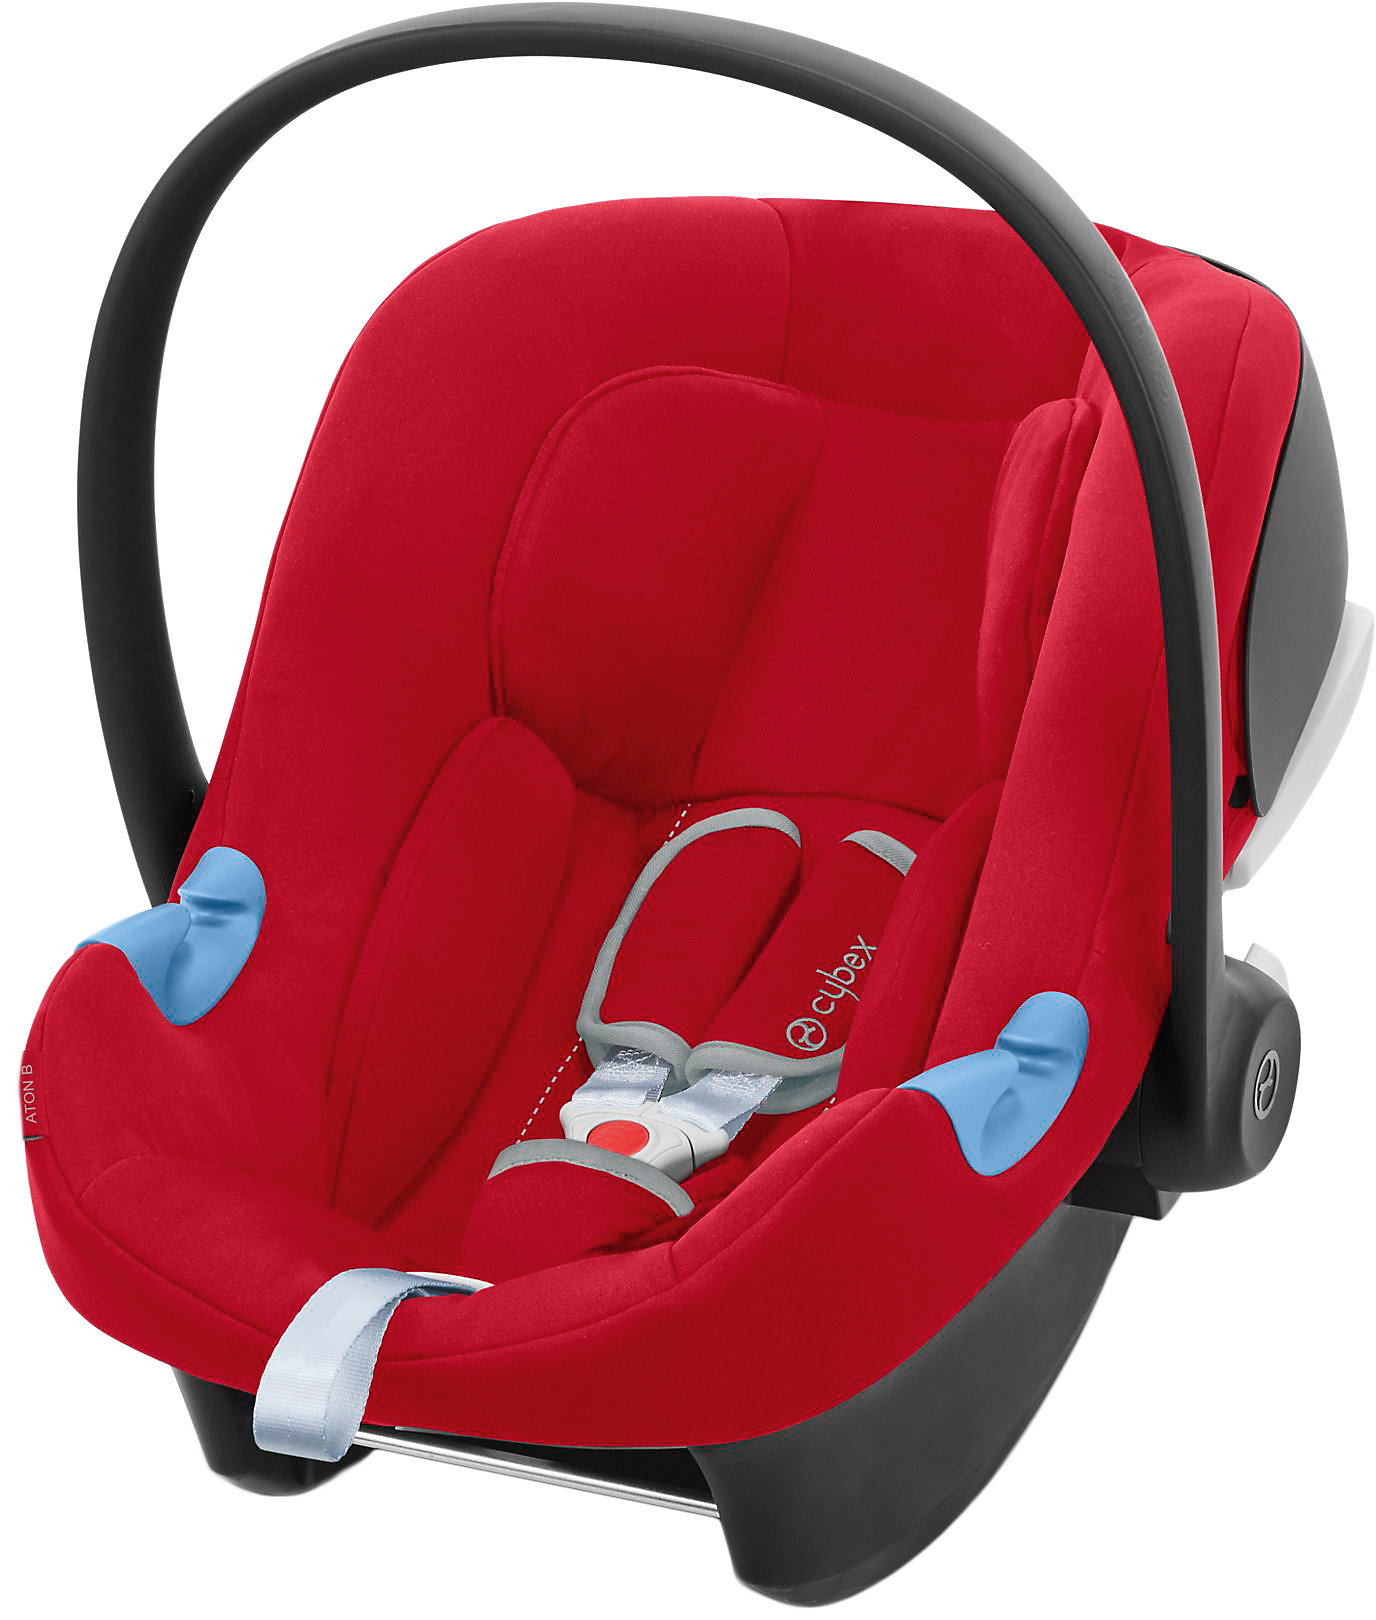 CARETERO TURBOFIX Rot Kindersitz Autositz mit ISOFIX GRUPPE I/II 9-25kg 